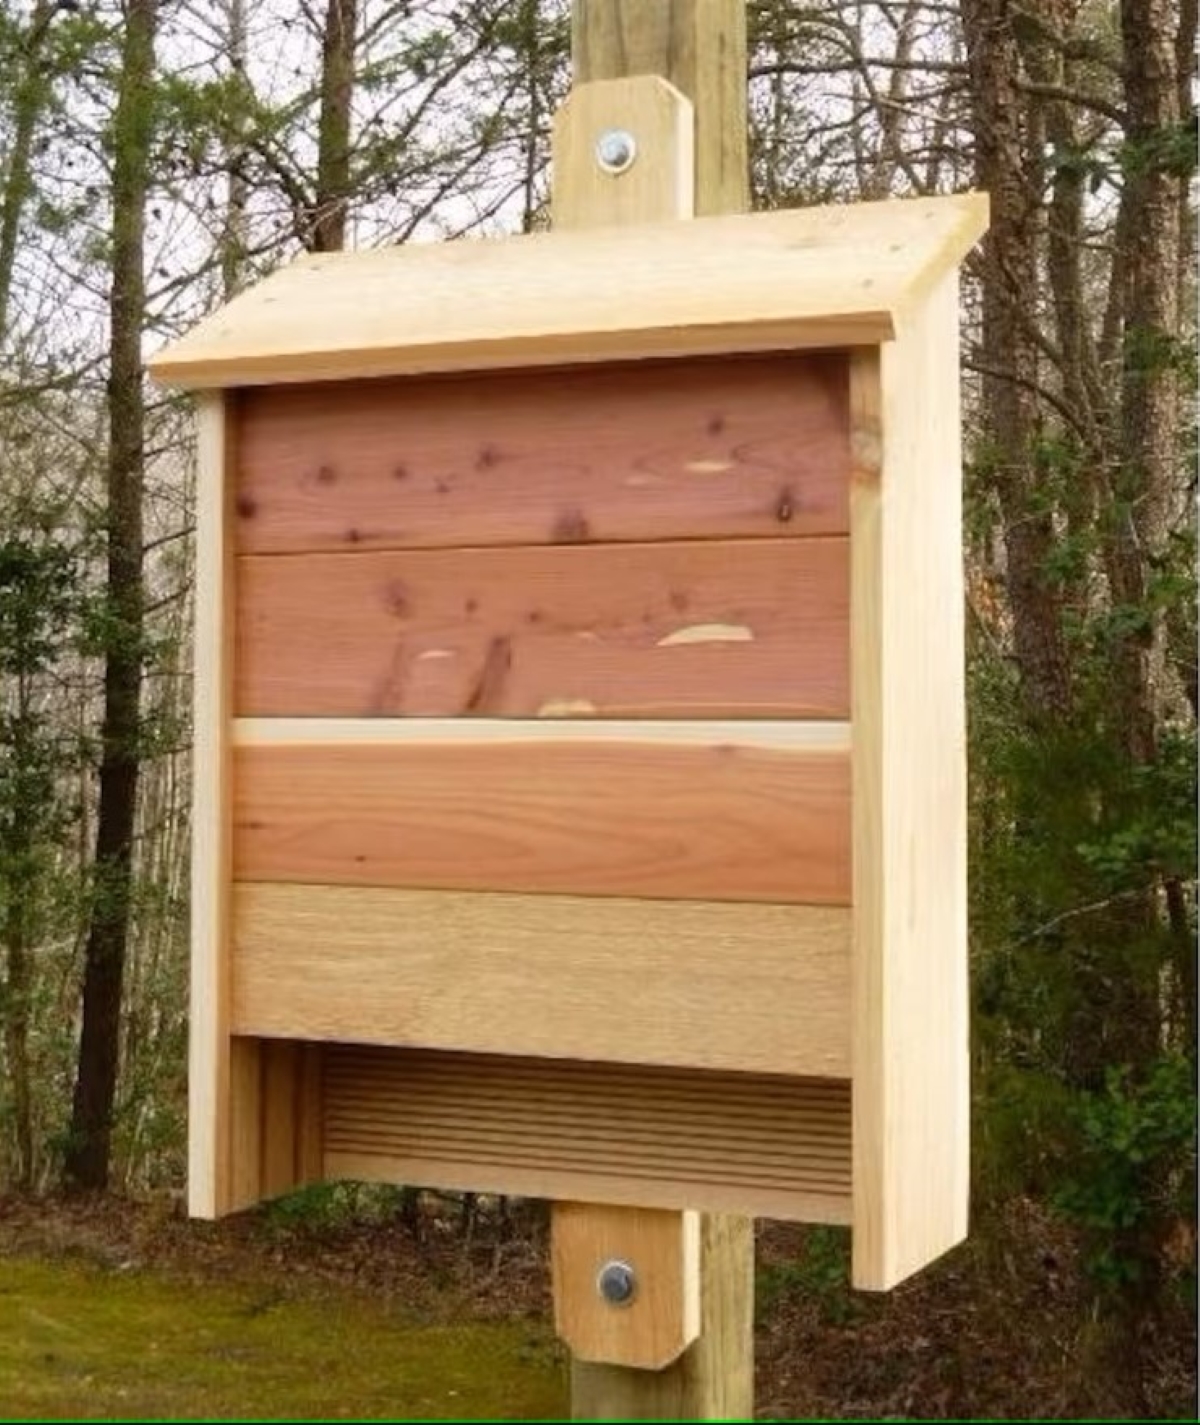 bat house plans - large wooden bat house on post